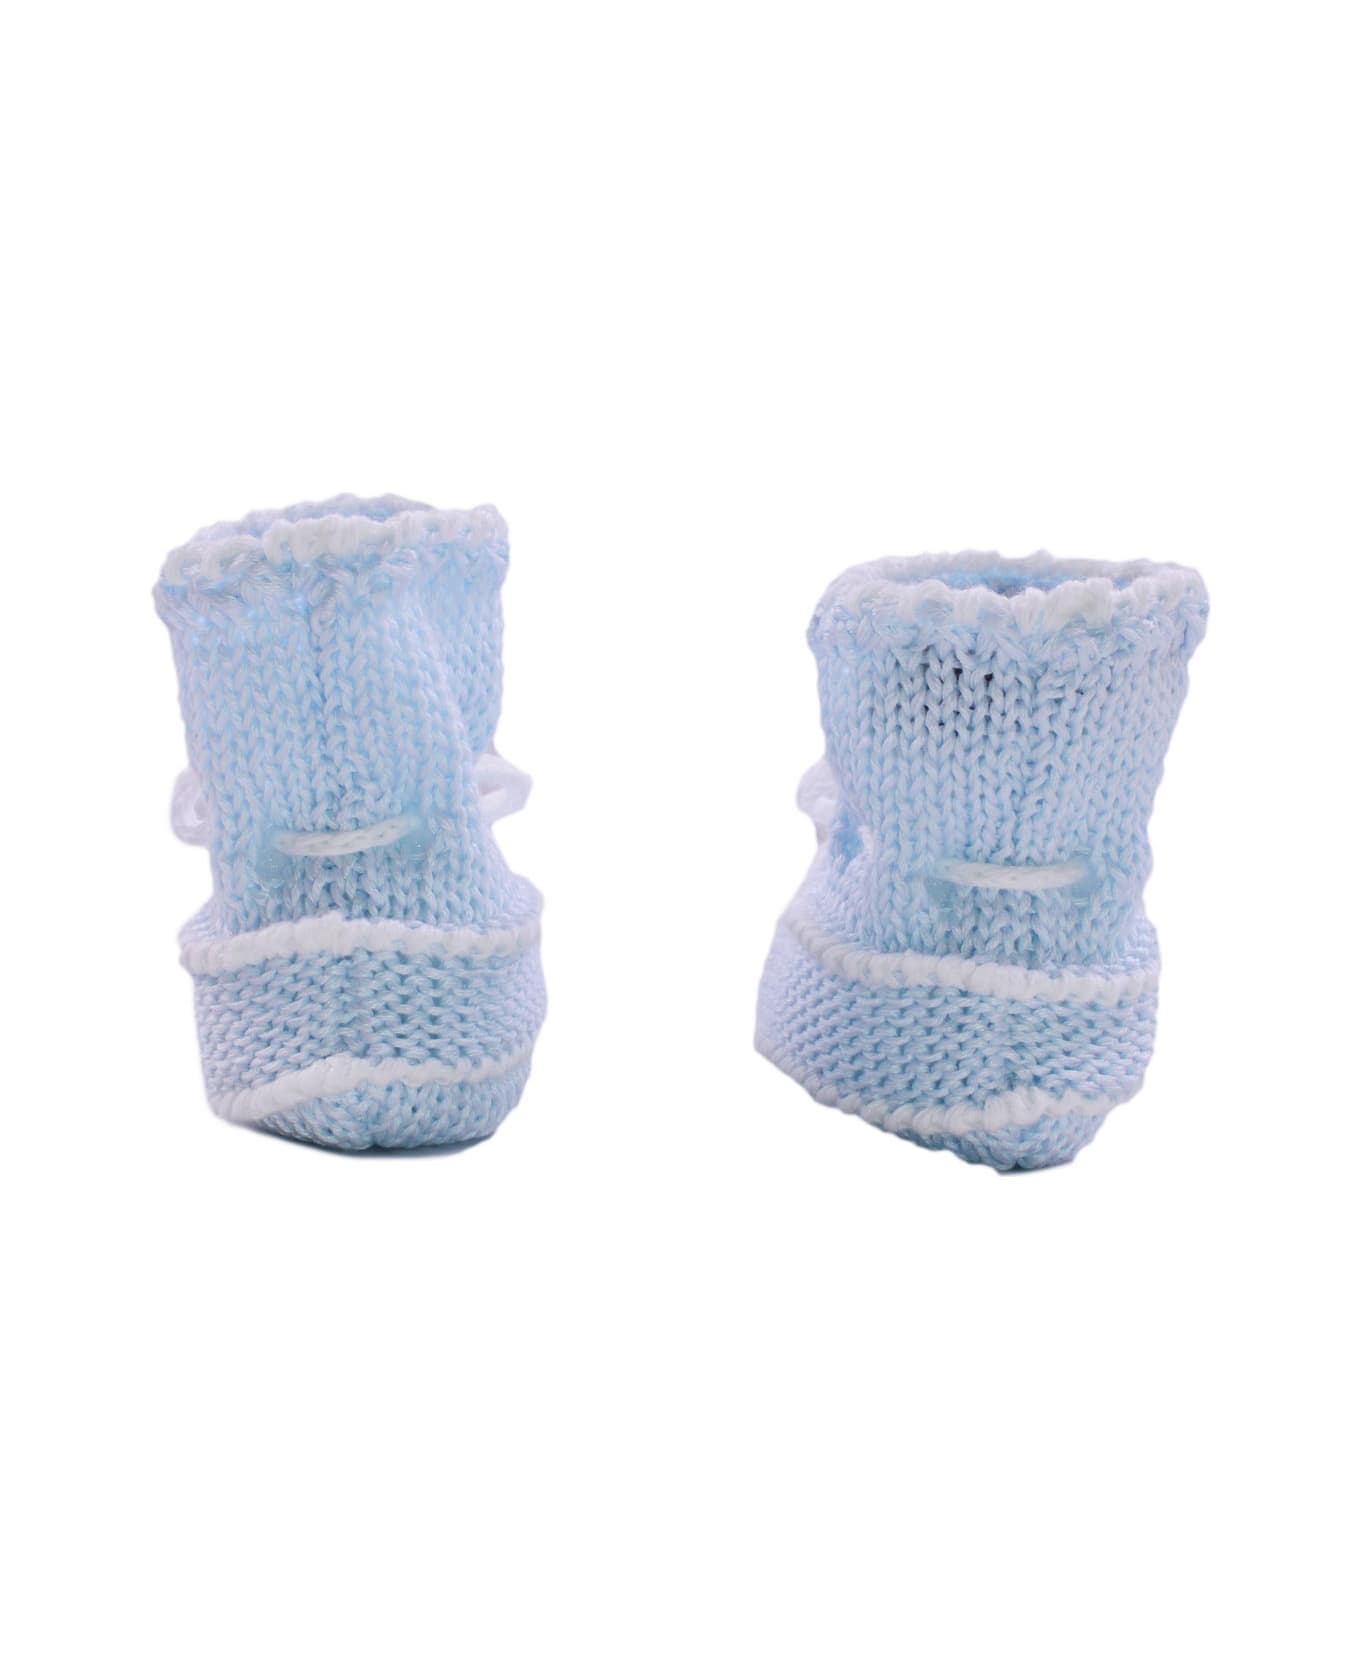 Piccola Giuggiola Cotton Knit Shoes - Light blue